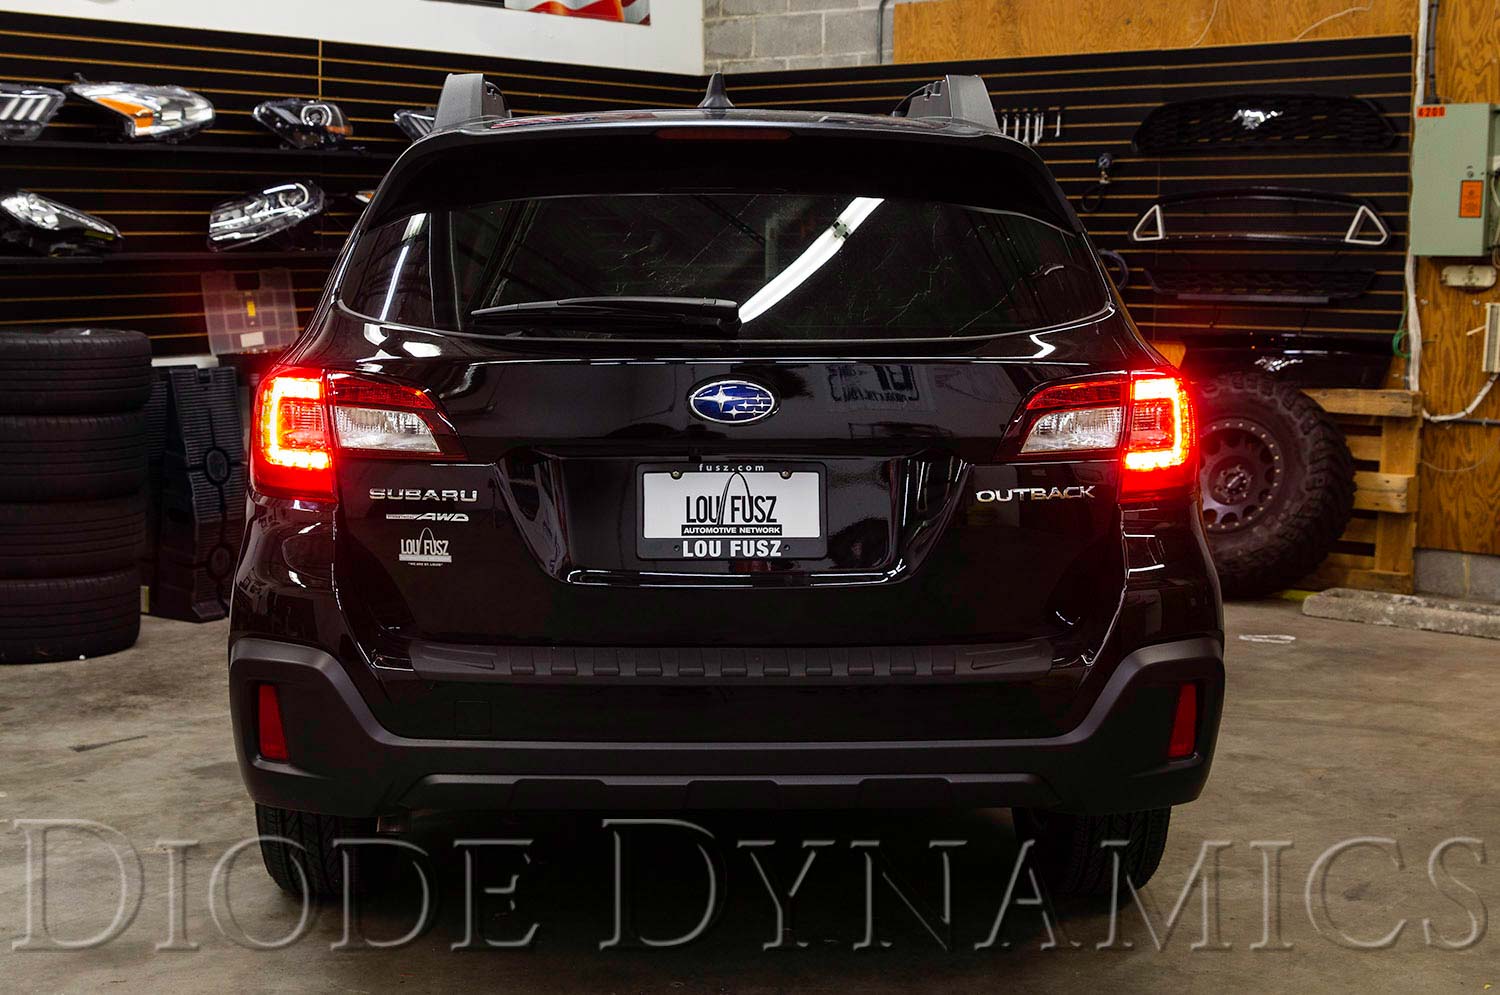 2015-2019 Subaru Outback Tail as Turn Module Diode Dynamics-dd3046